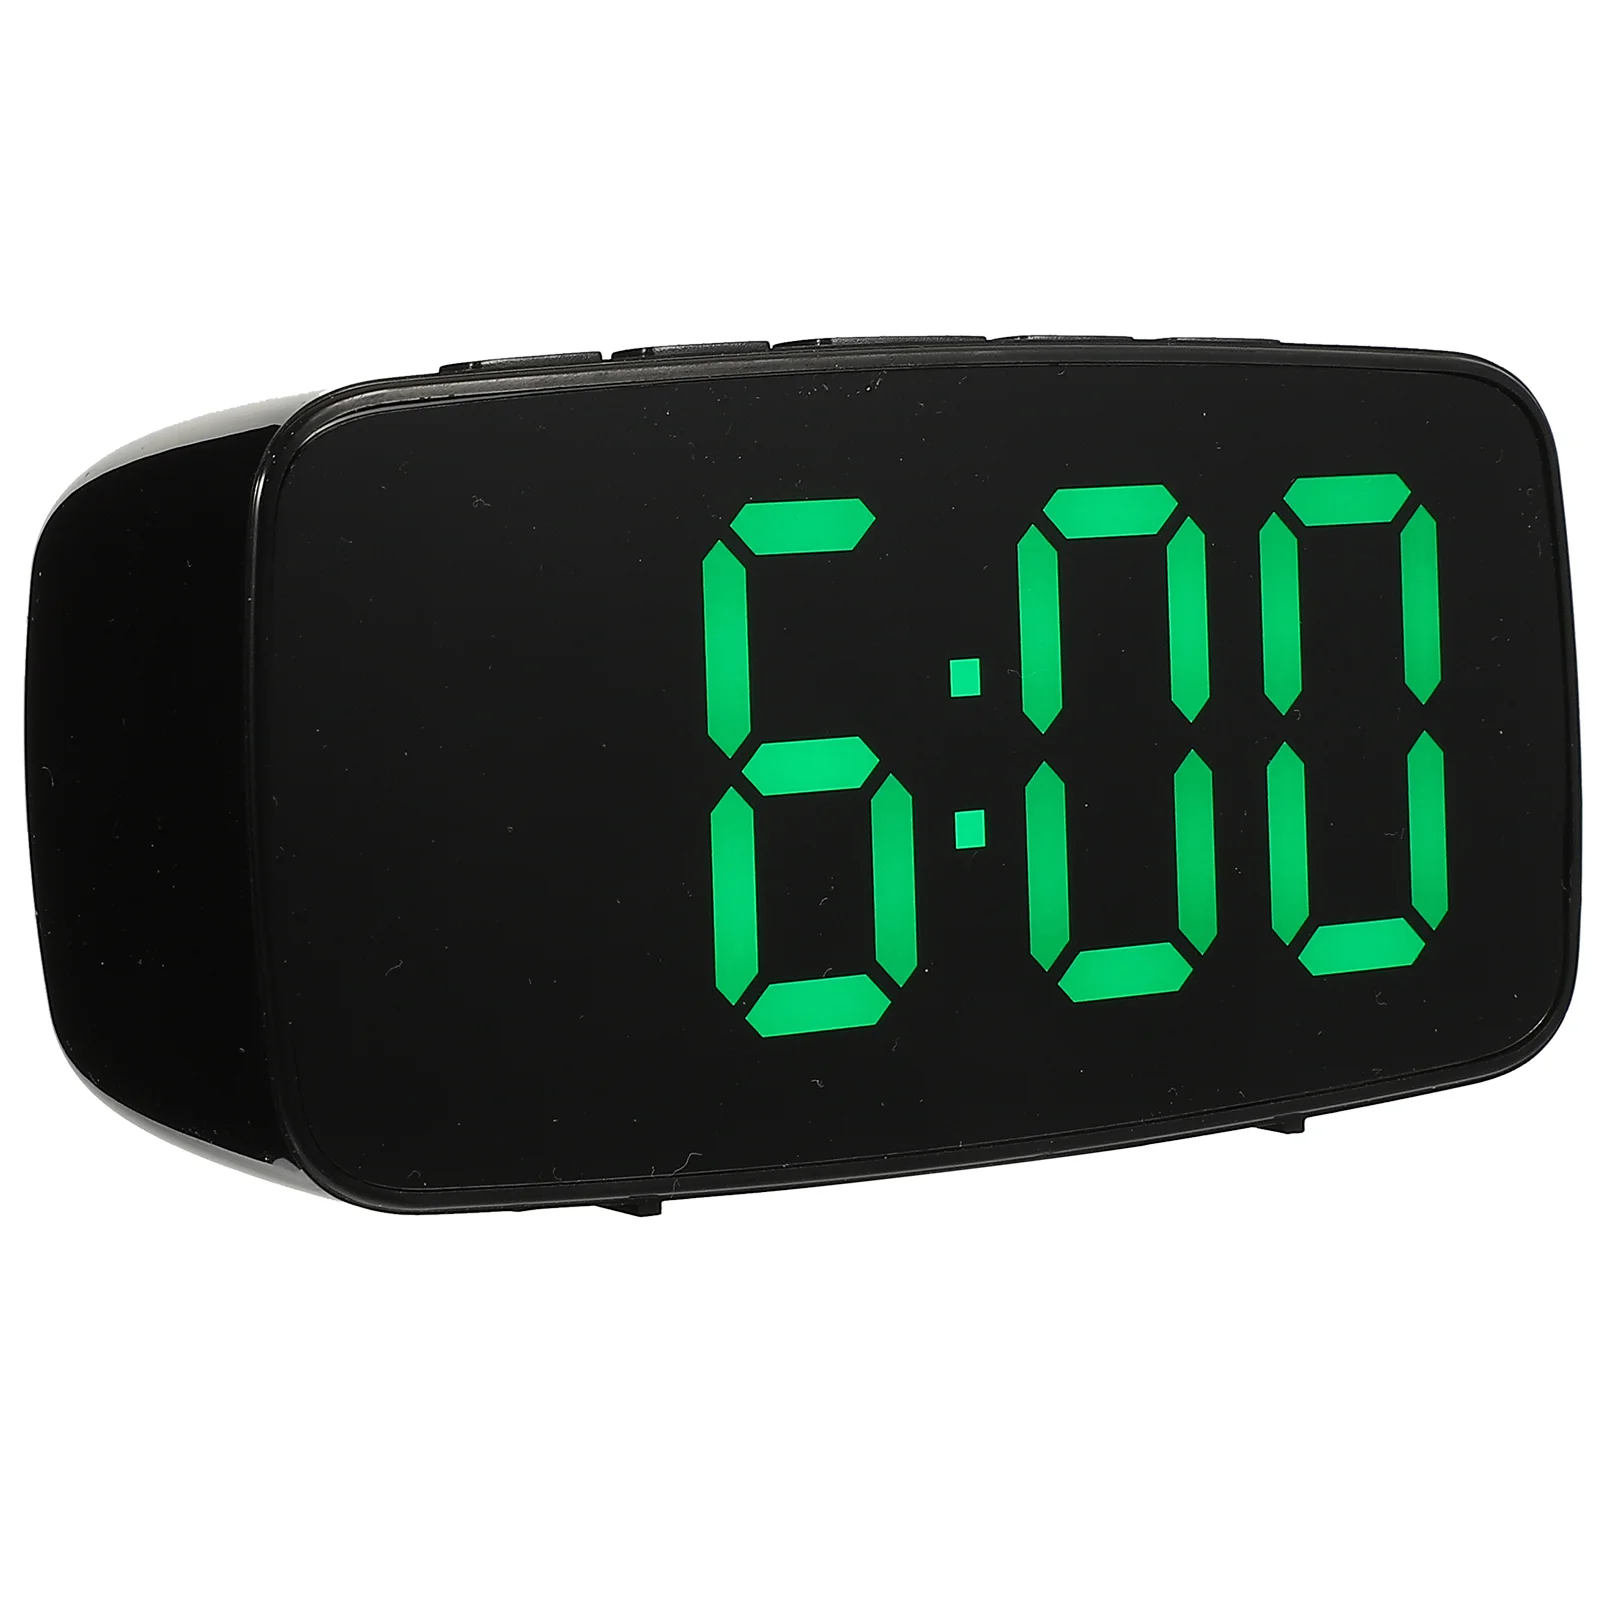 

LED Electronic Alarm Clock Electric Cool Clocks Aesthetic Small Light Digital Large Display Bedside Desk Office